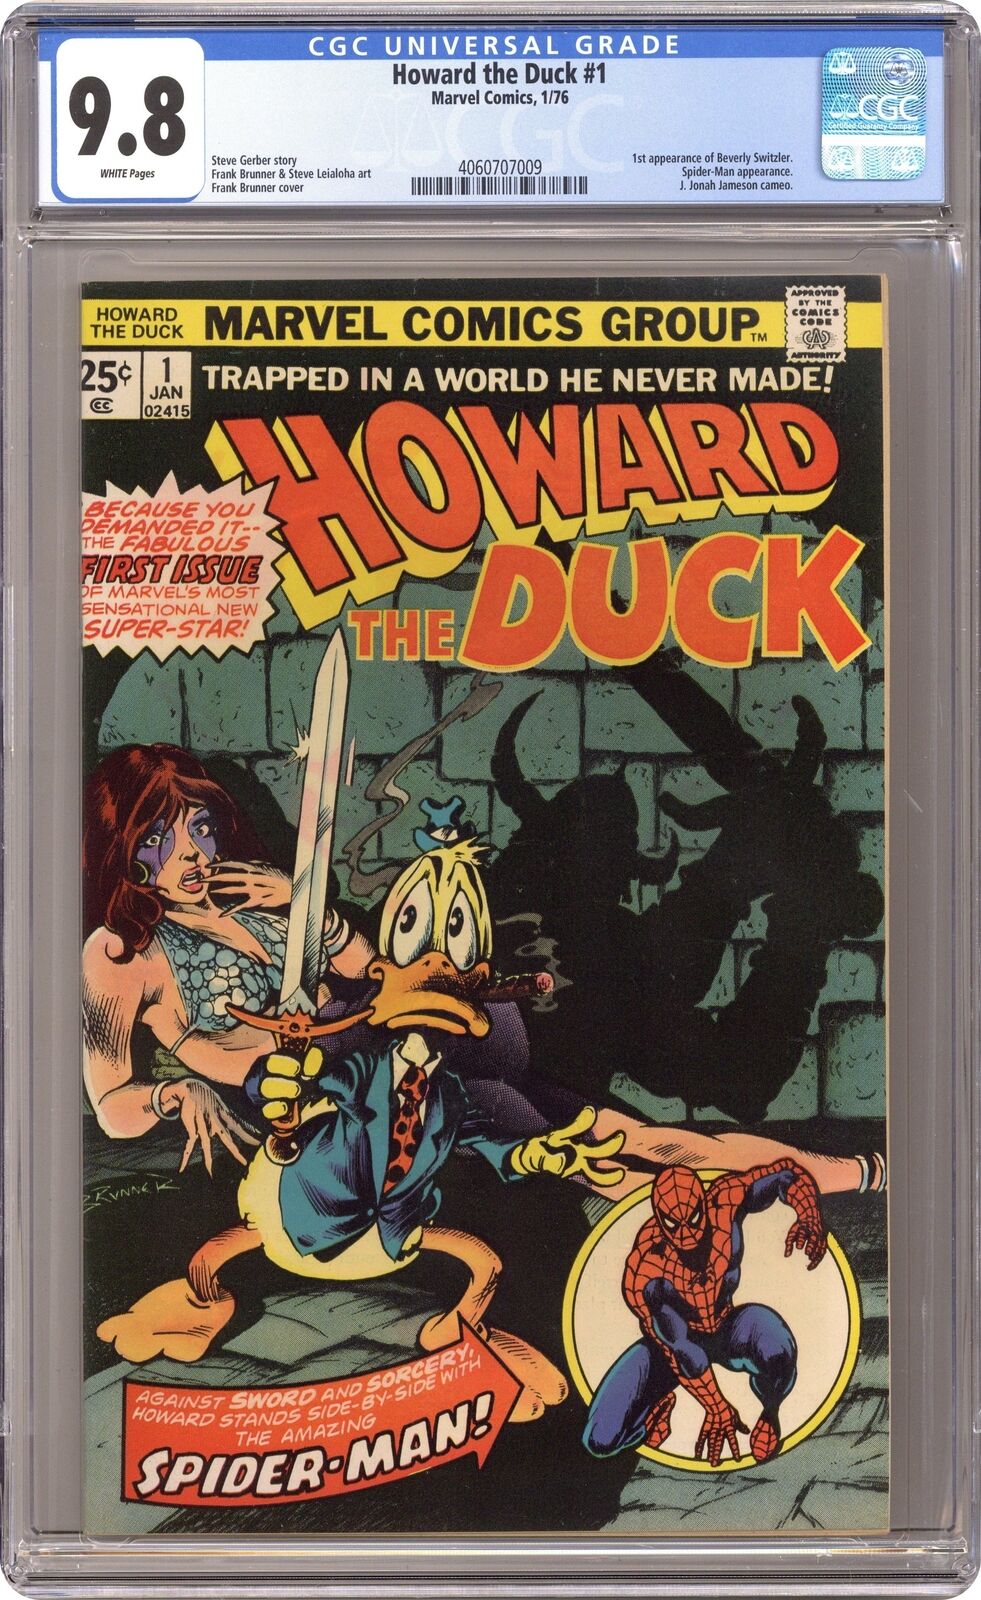 Howard the Duck #1 CGC 9.8 1976 4060707009